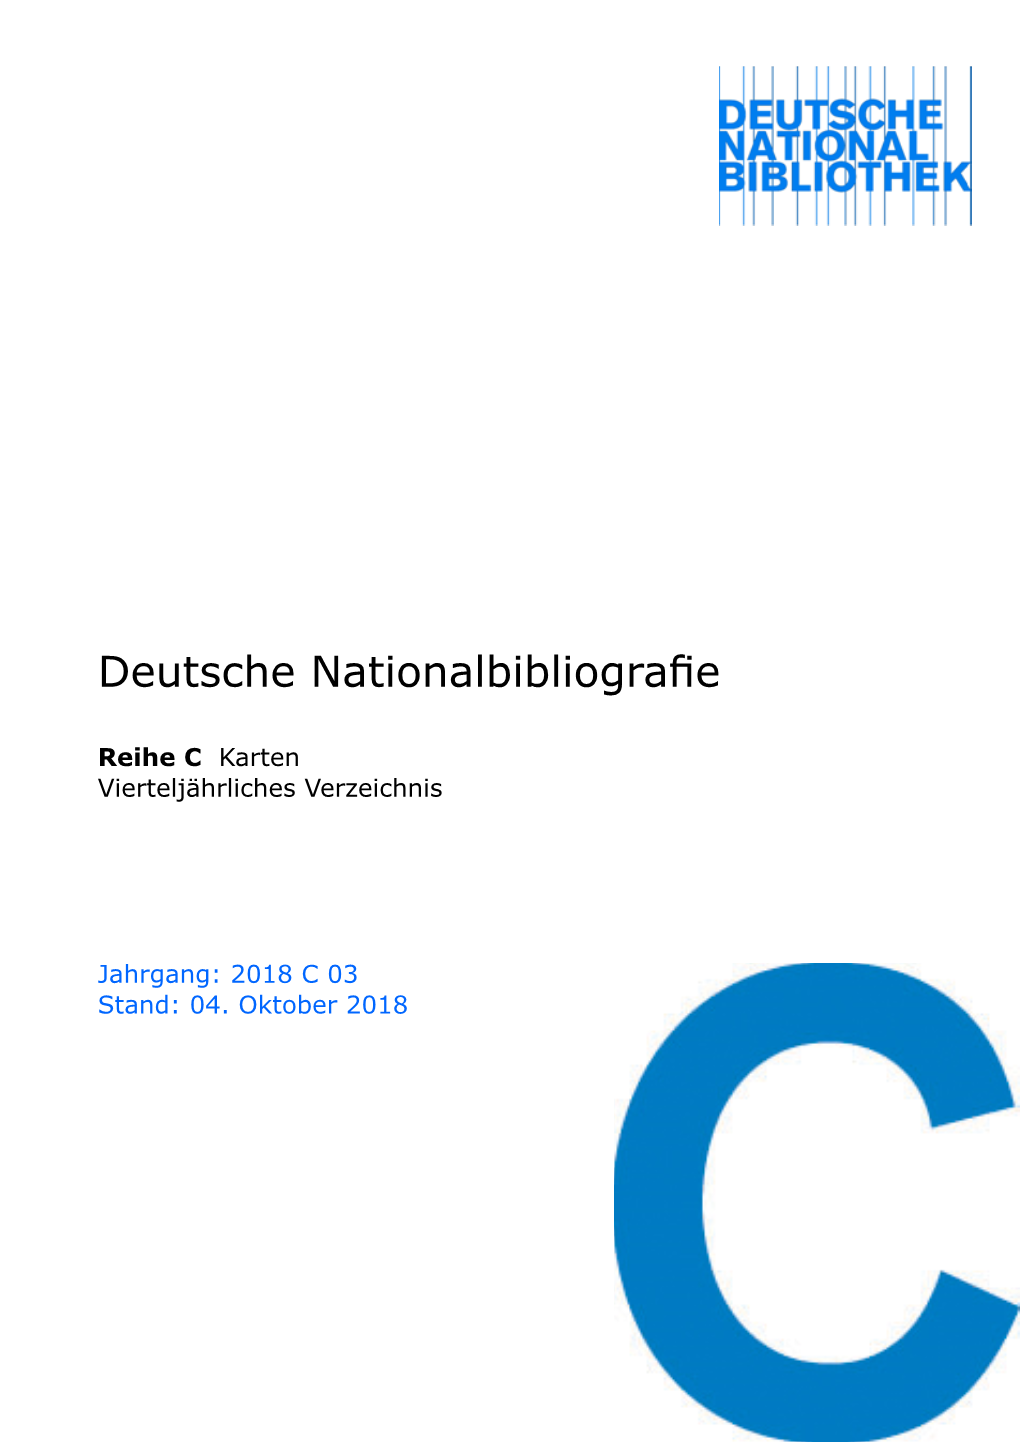 Deutsche Nationalbibliografie 2018 C 03